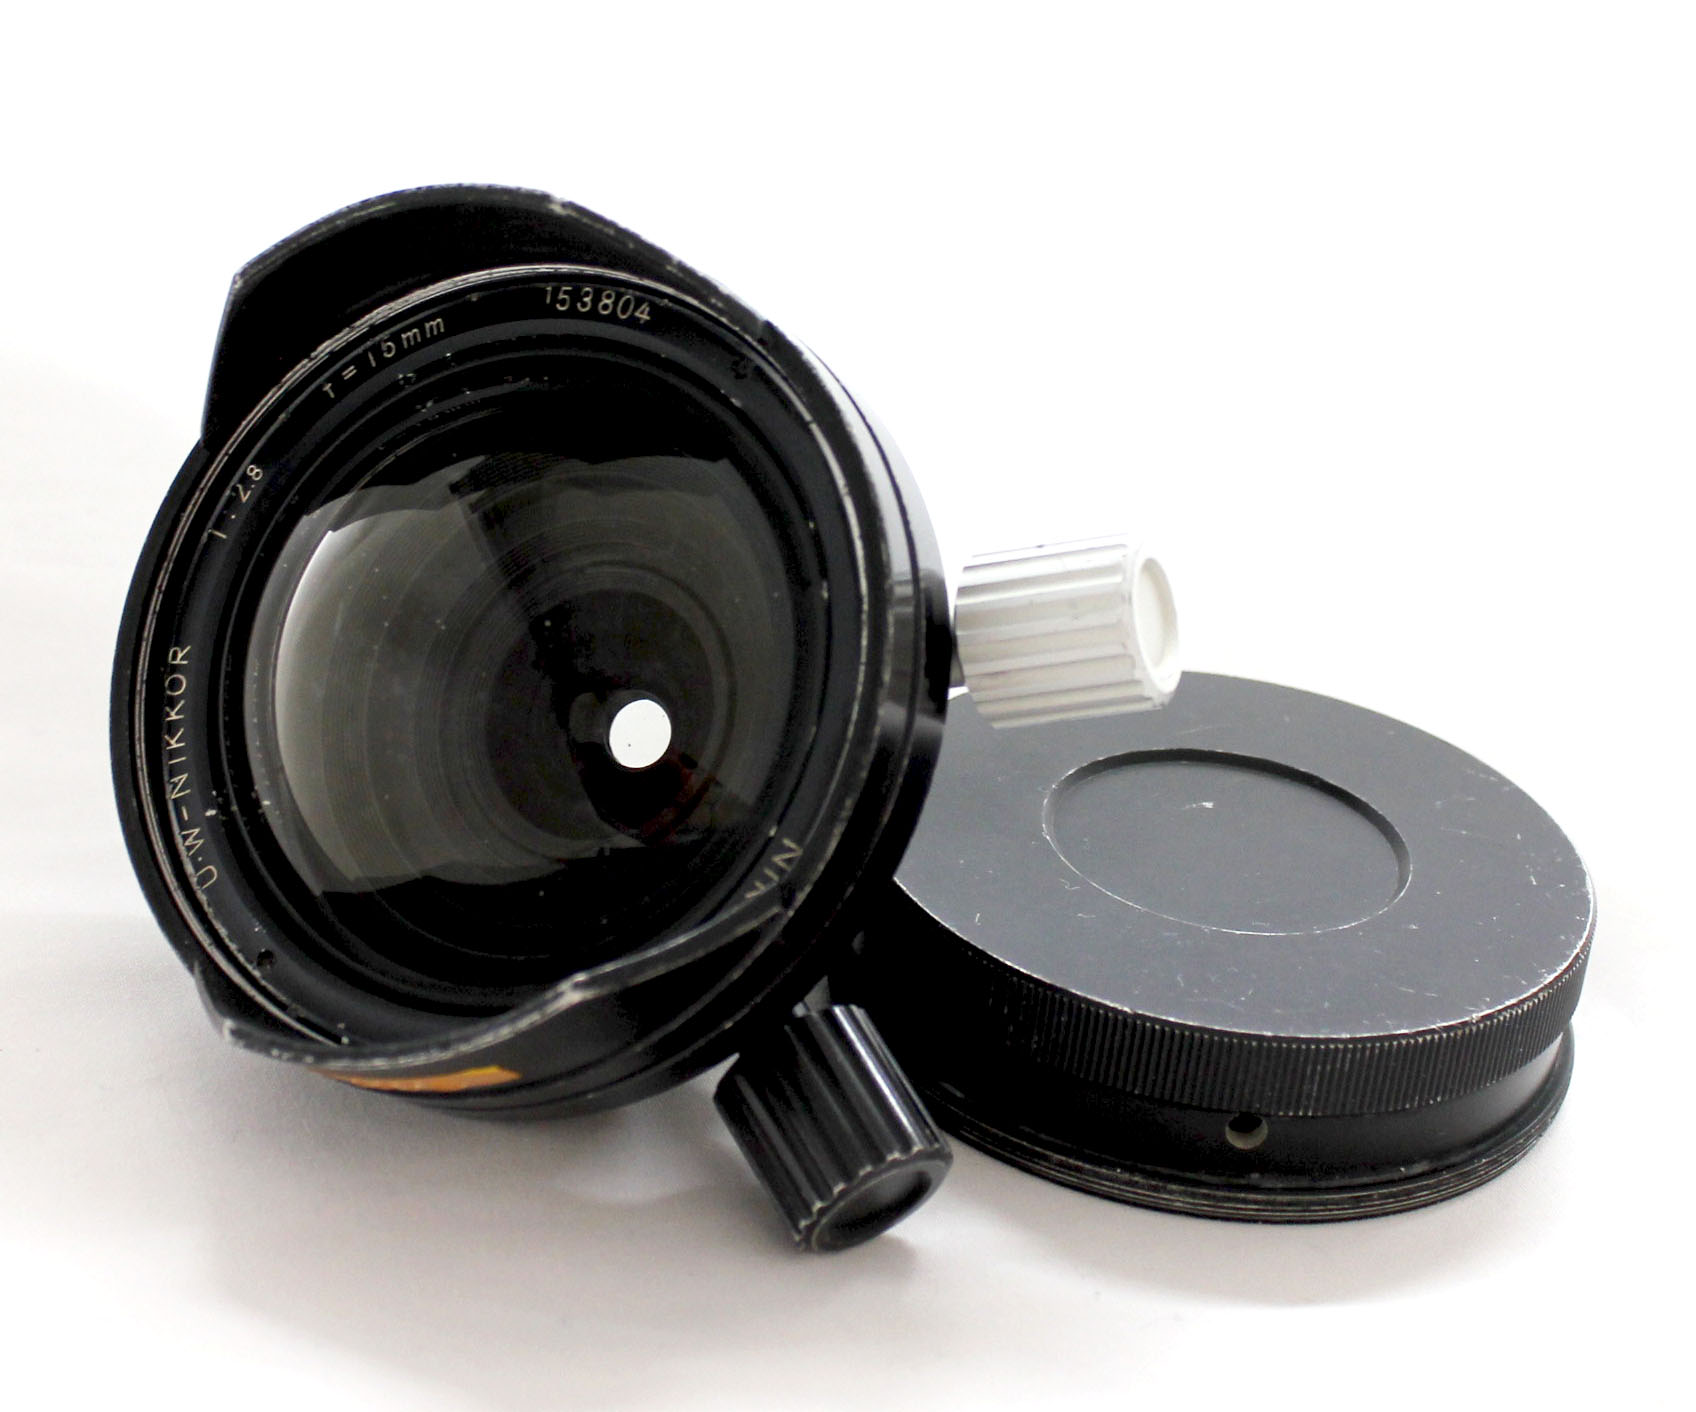 Japan Used Camera Shop | Nikon UW Nikkor 15mm F/2.8 Wide Angle Under Water Lens for Nikonos from Japan